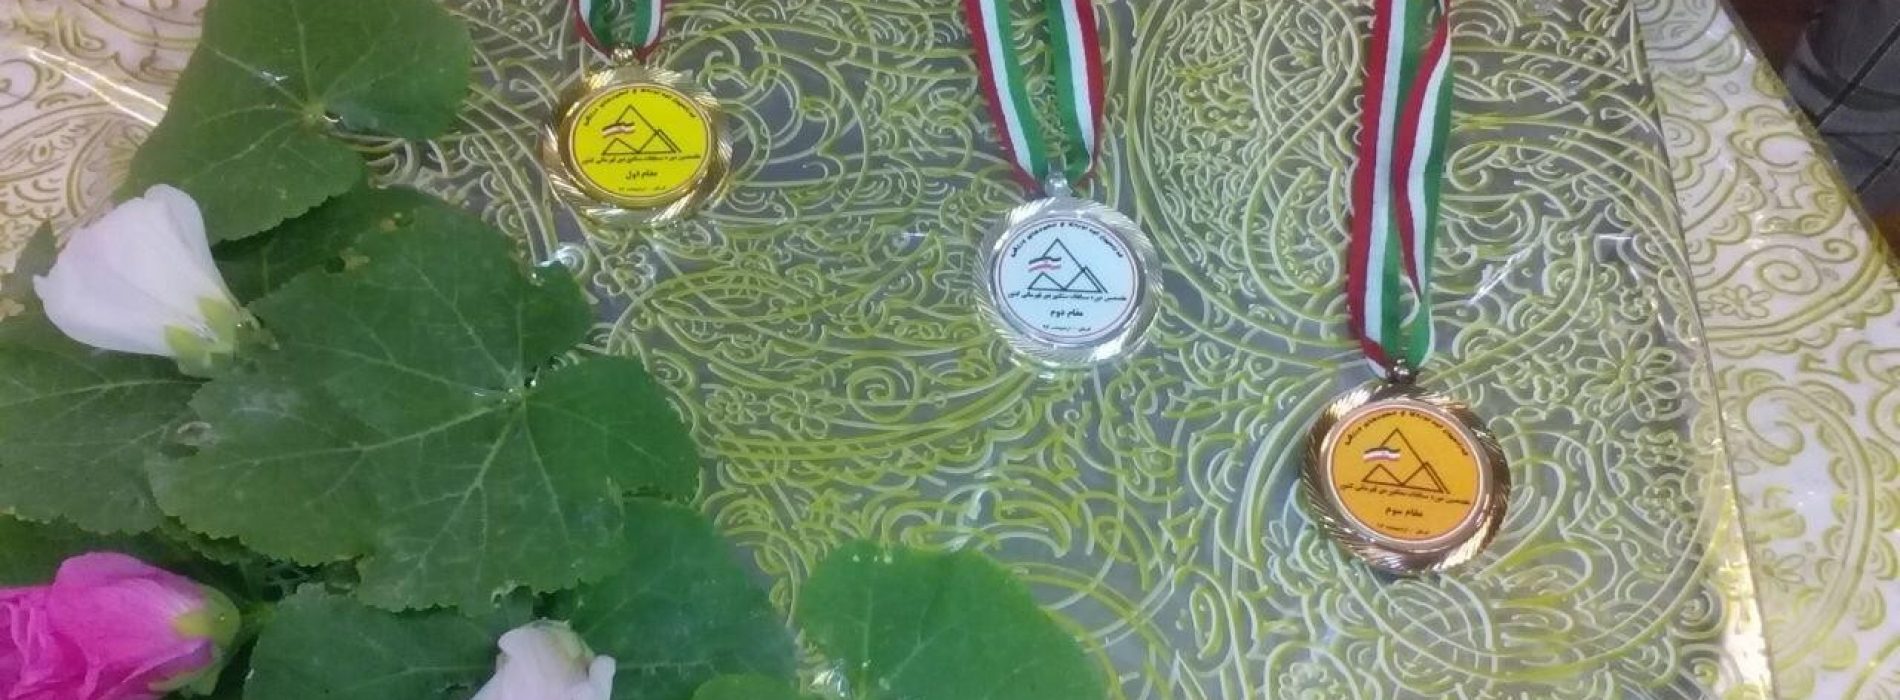 نتایج هفدهمین دوره مسابقات سنگنوردی قهرماني كشور / اورال بانوان